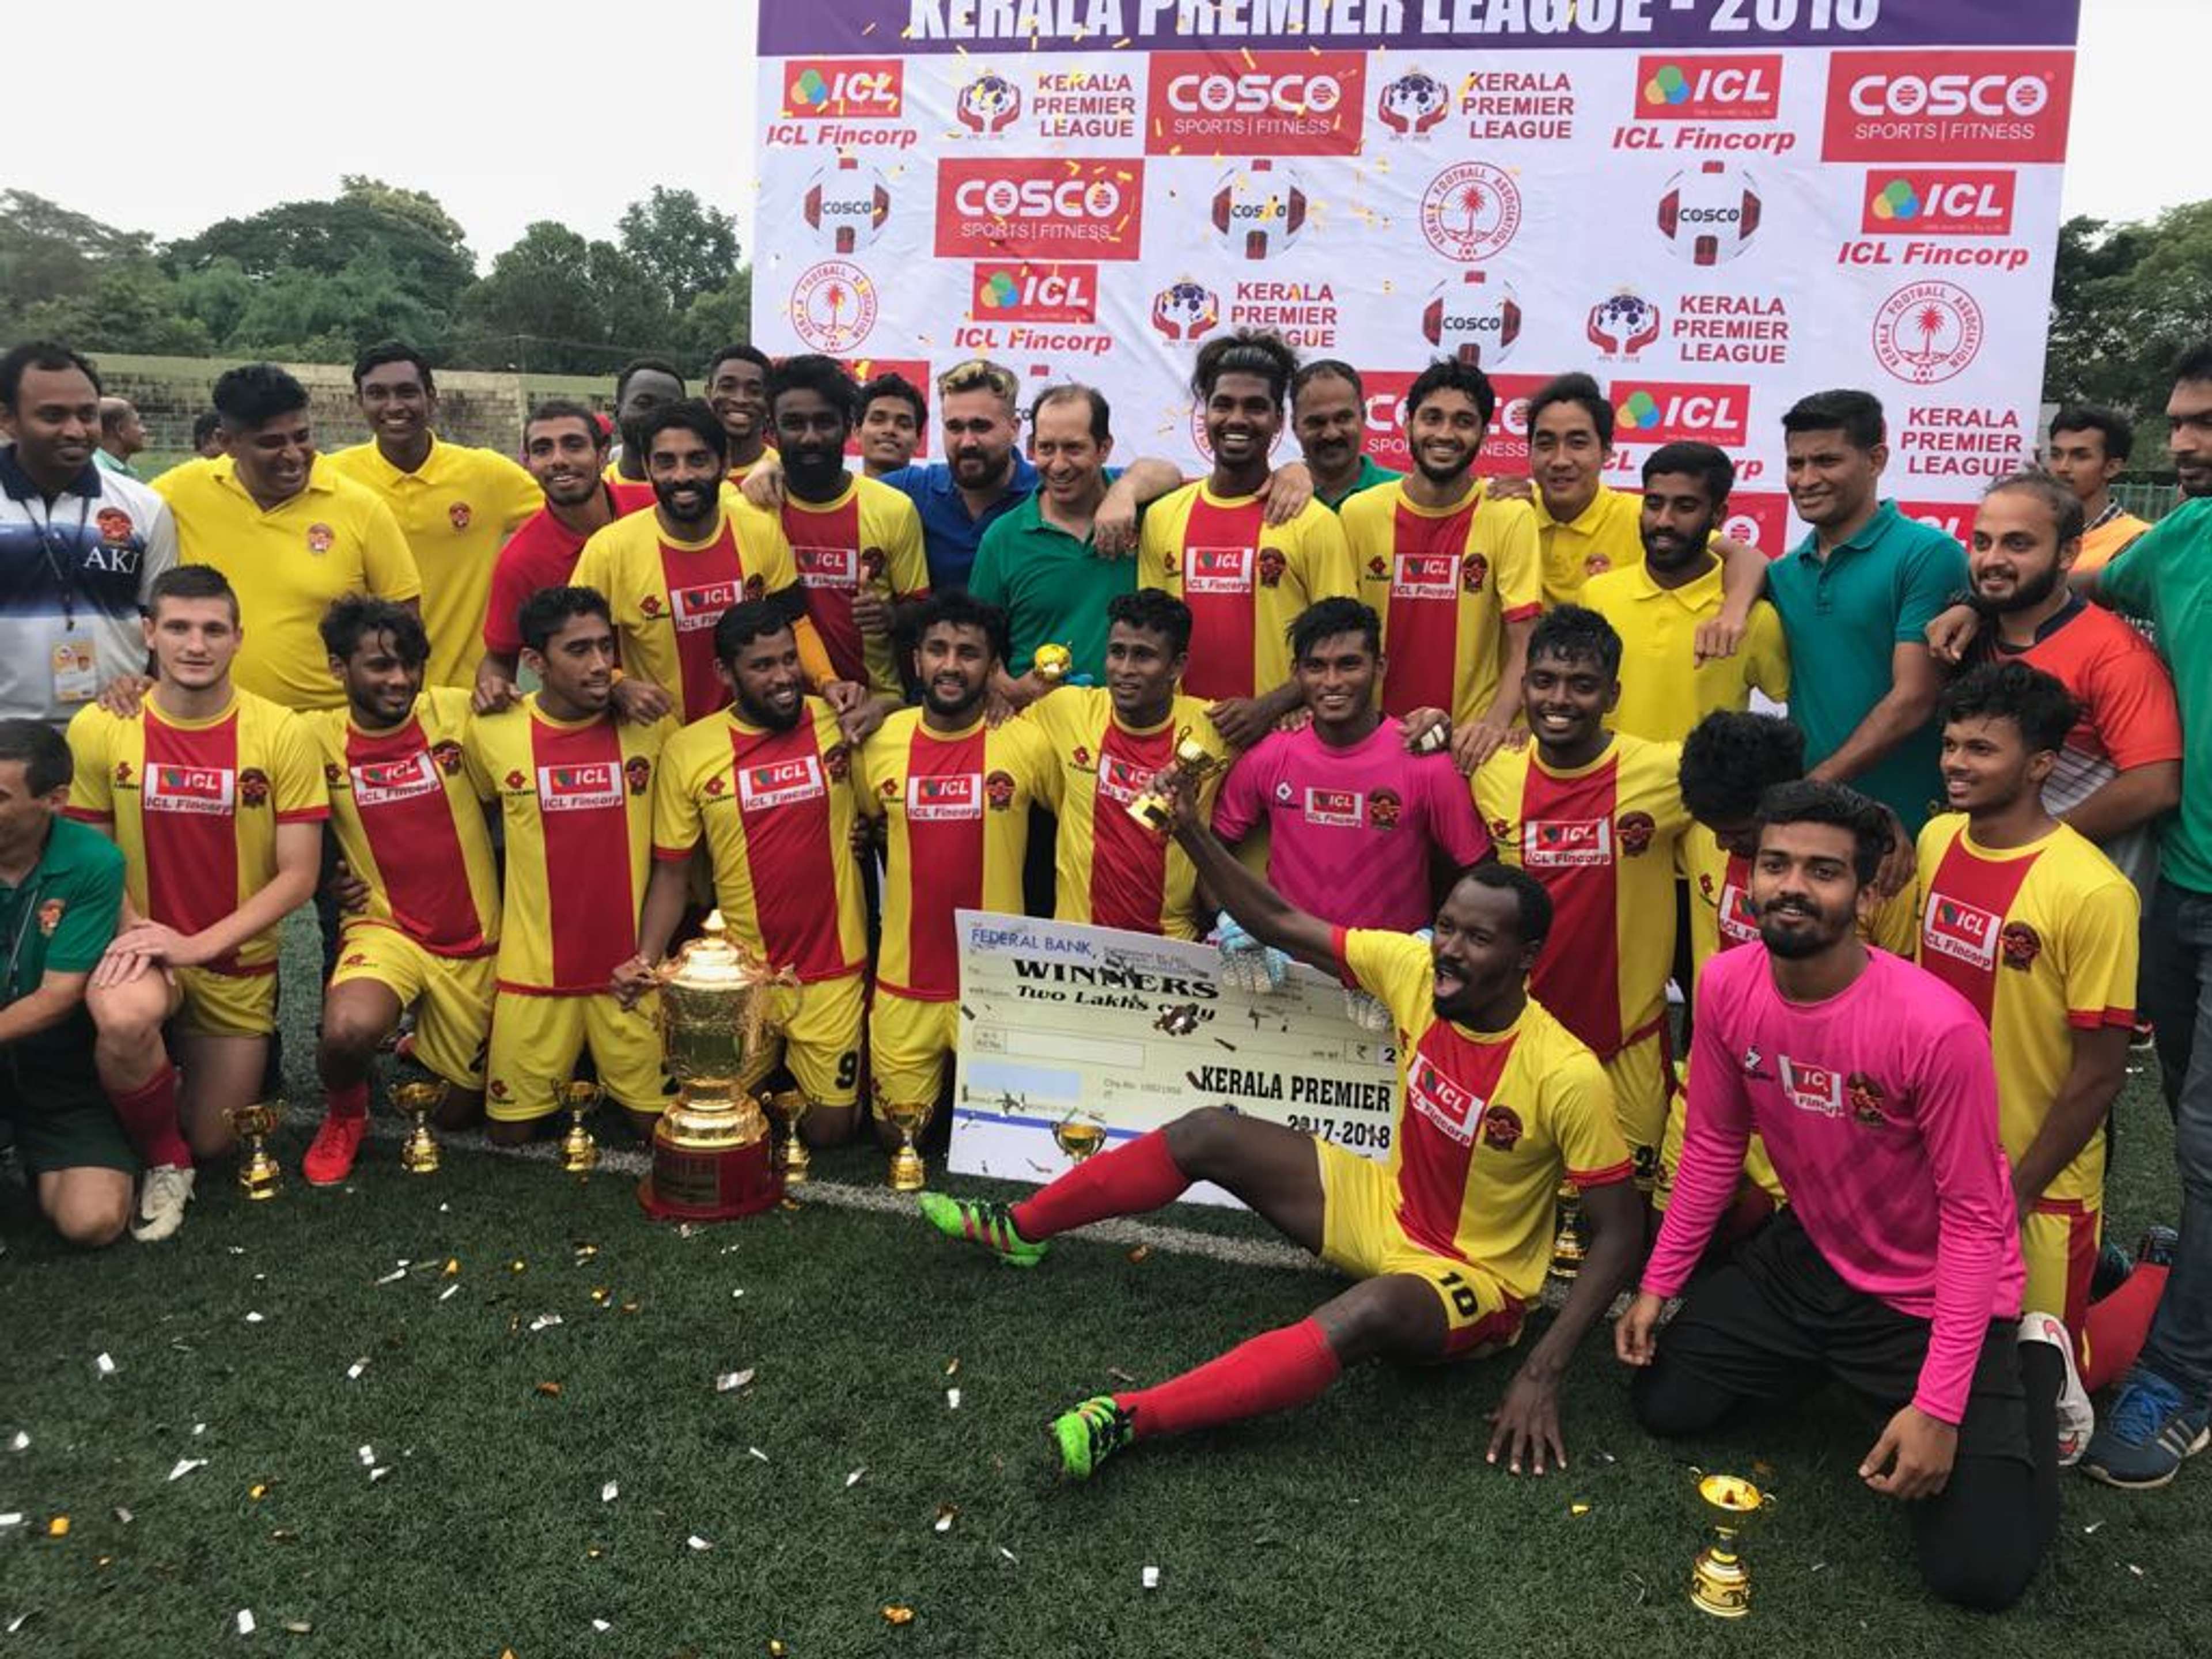 Gokulam Kerala Premier League 2018